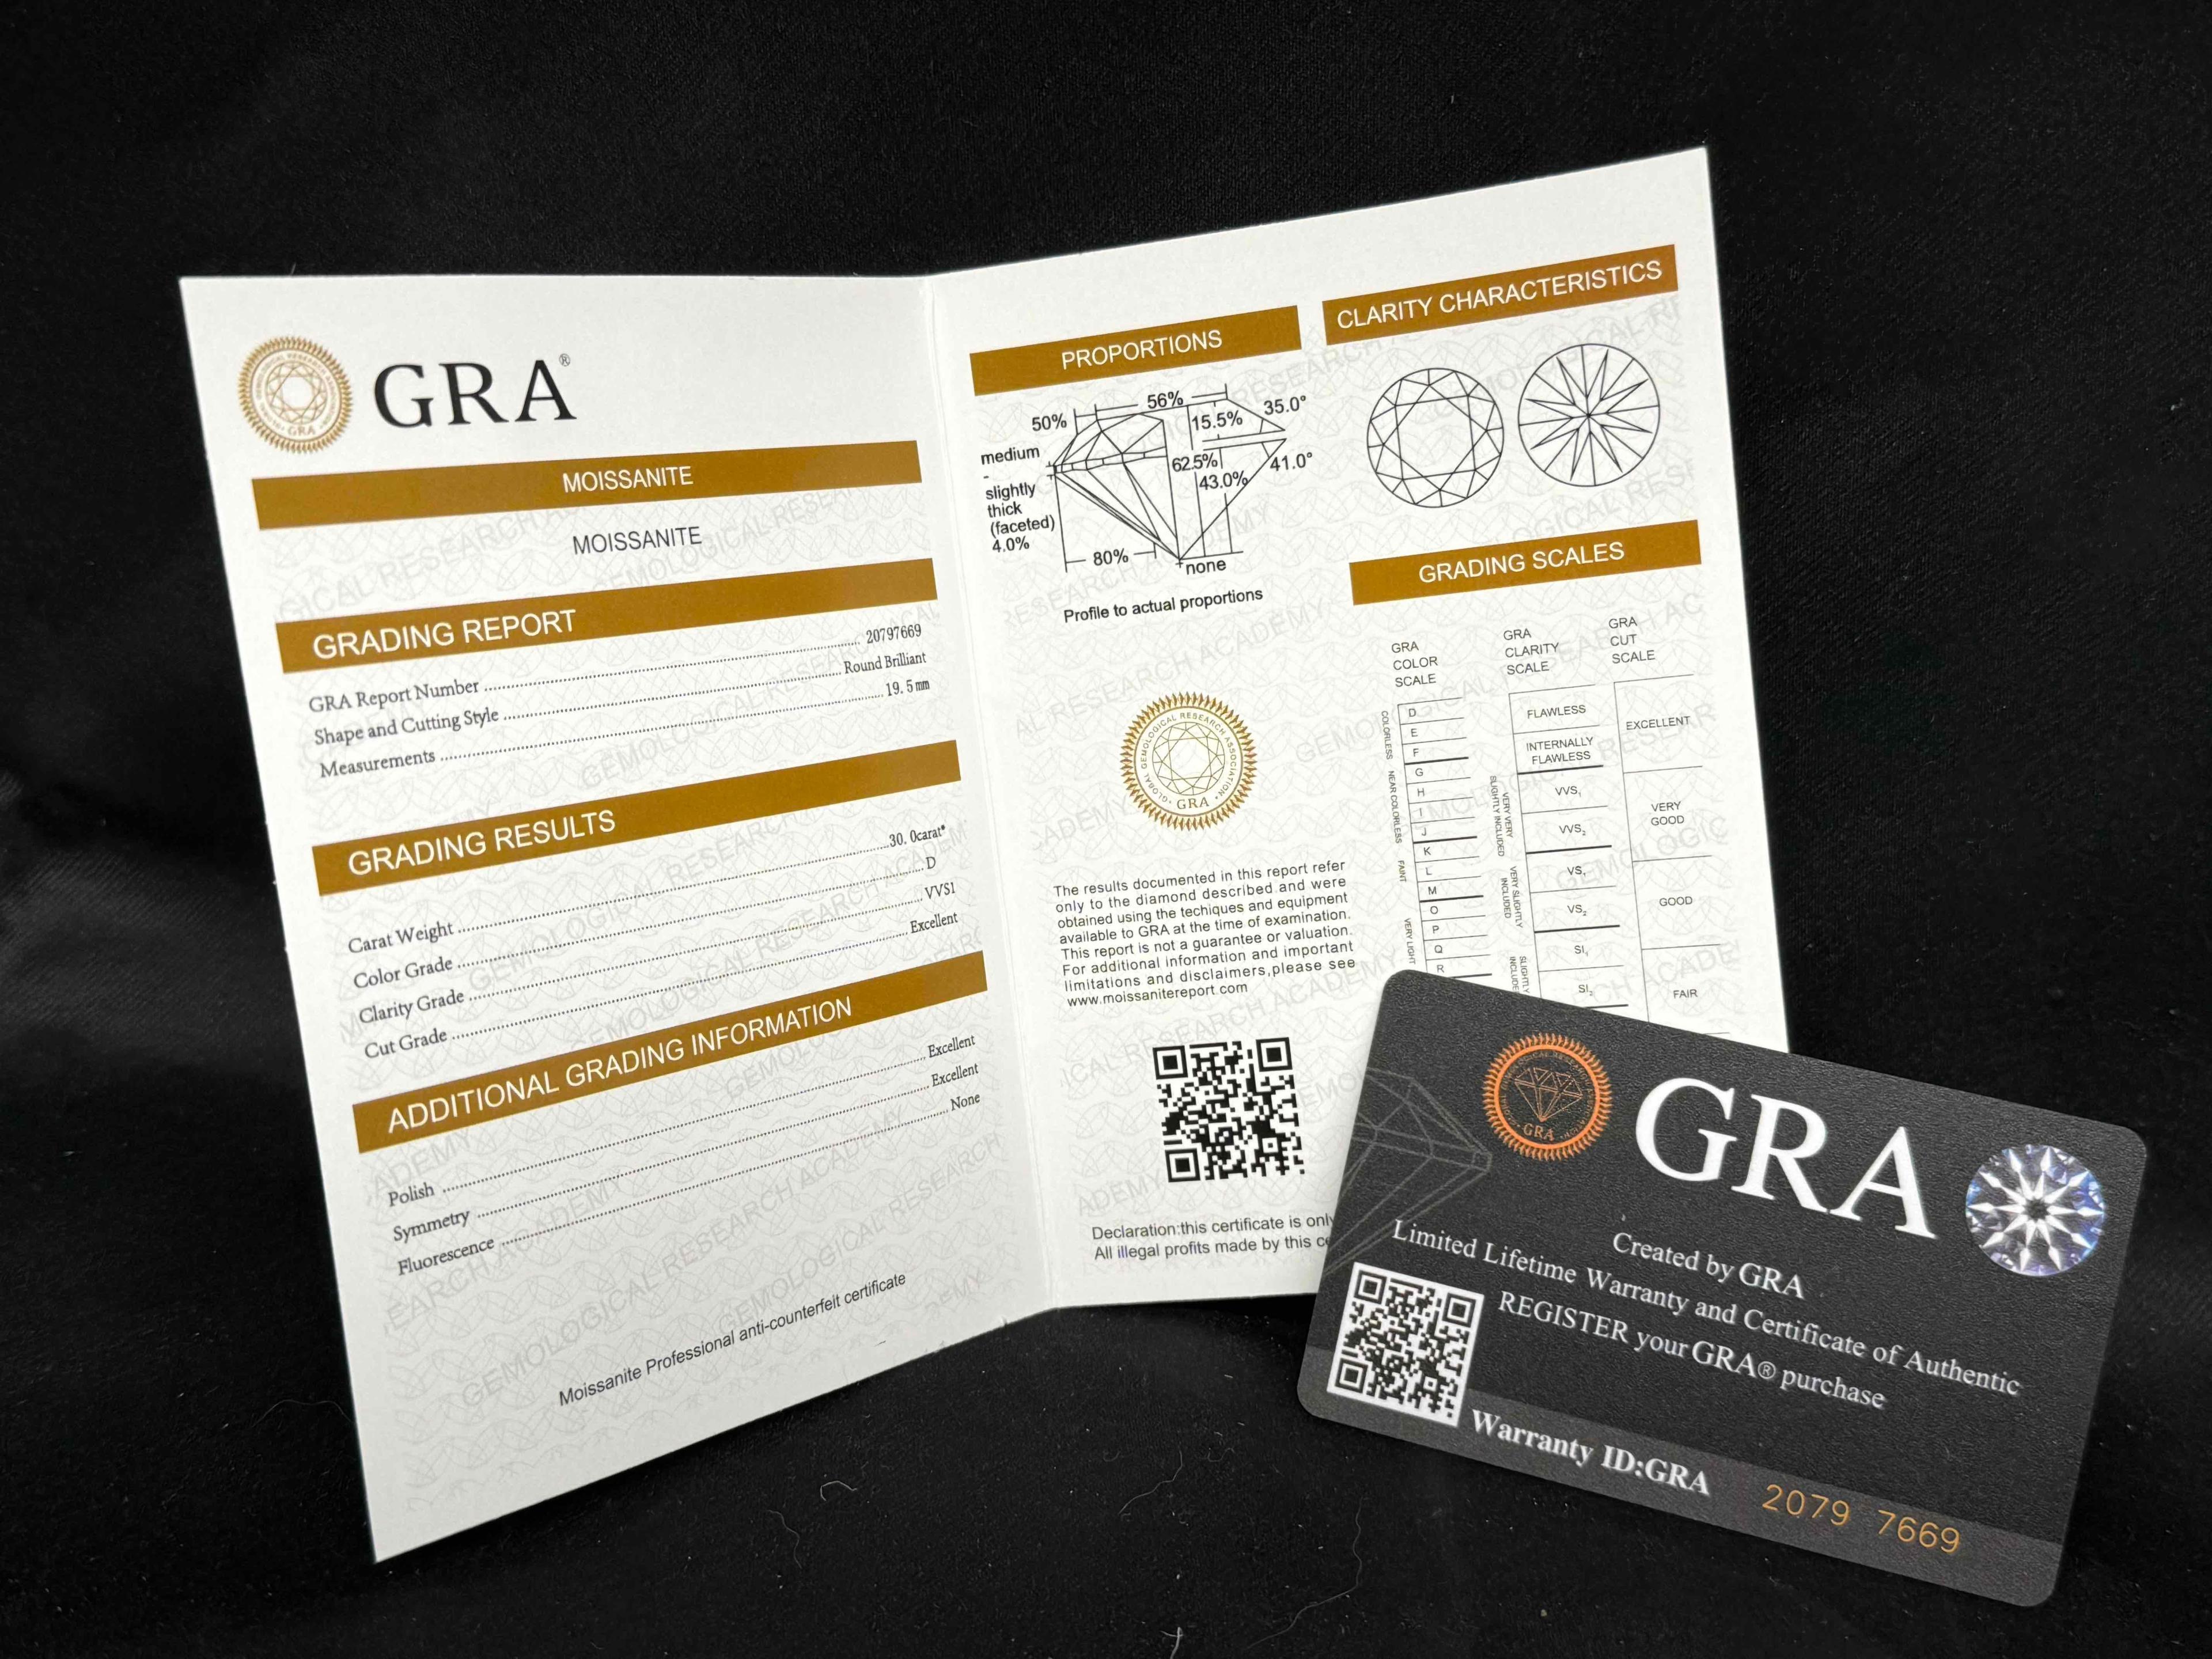 25.4ct Brilliant Cut Moissanite Gemstone with GRA Certificate